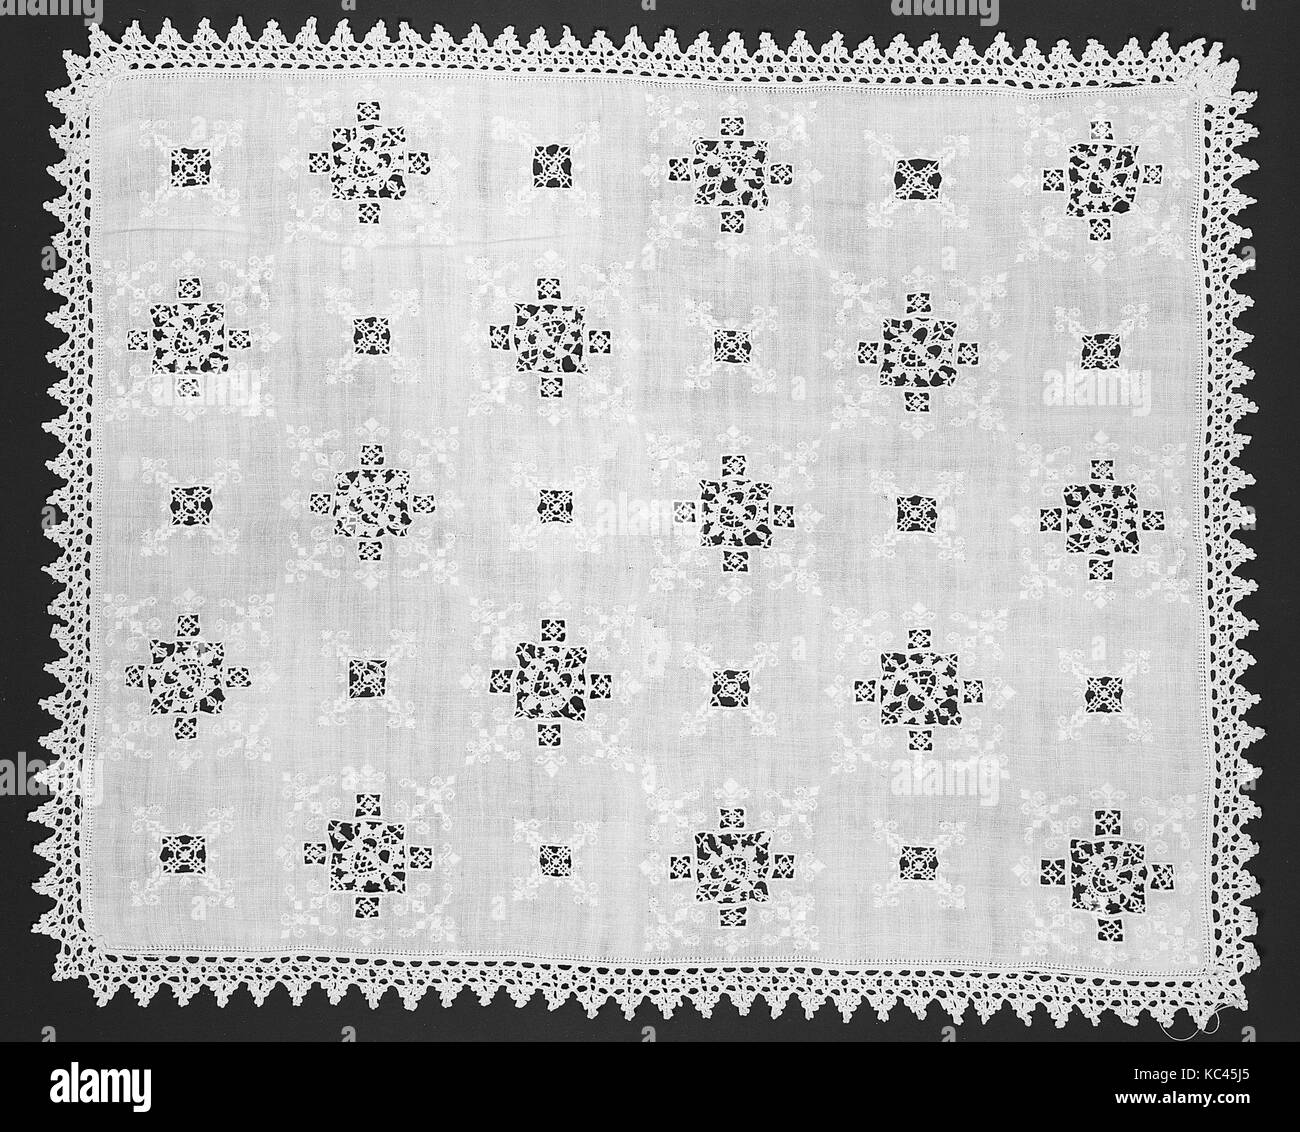 Mat, 16th century, Italian, Linen, bobbin lace, L. 18 x W. 14 inches, Textiles-Laces Stock Photo